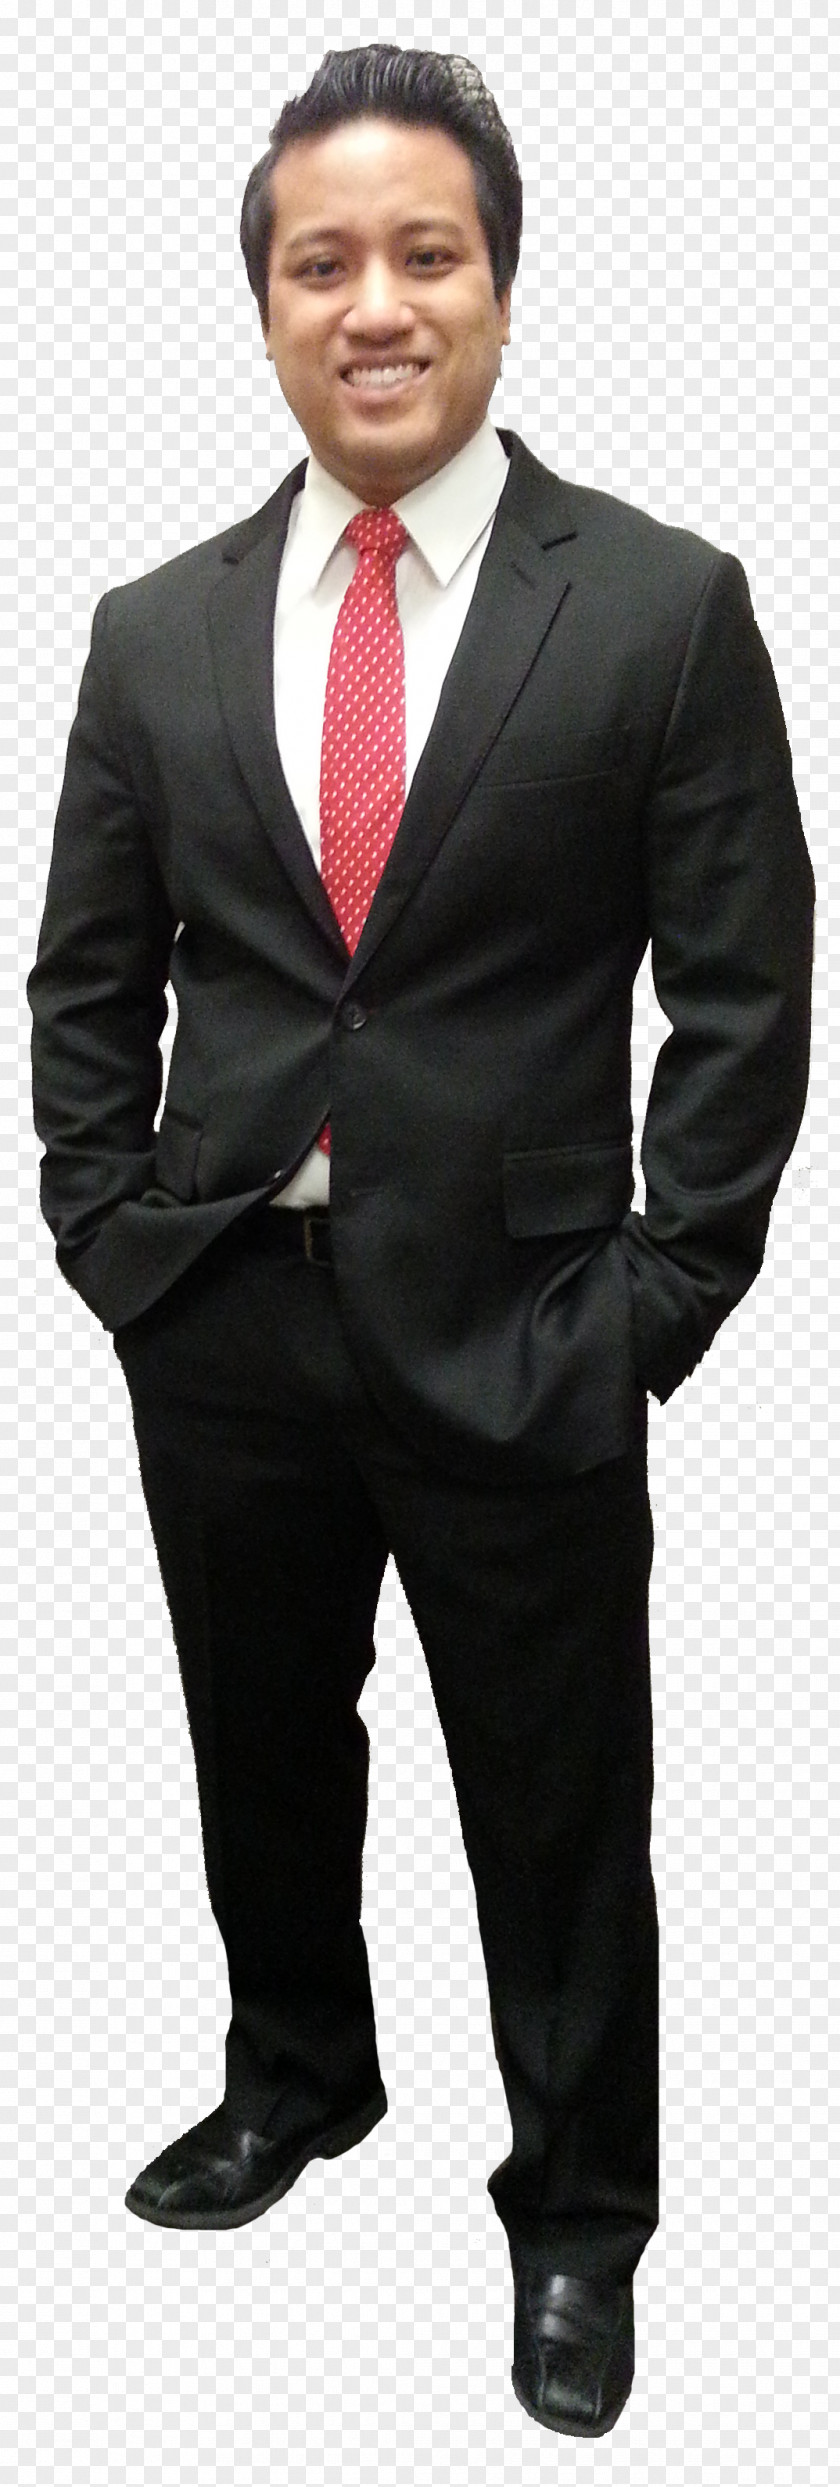 Suit Amazon.com Clothing Tailor Tuxedo Costume PNG